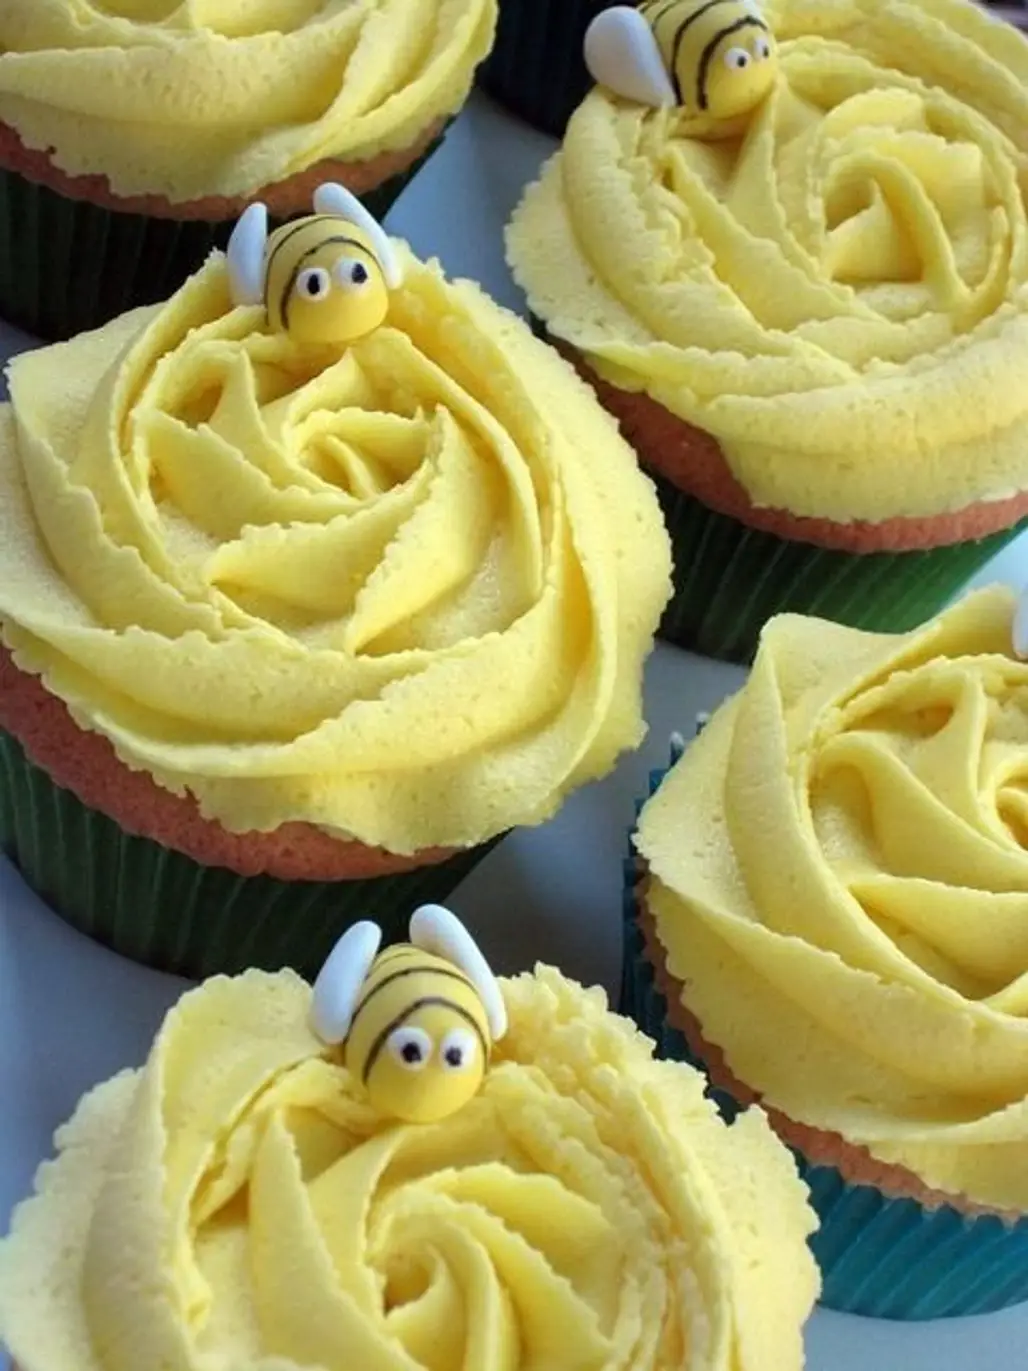 Bee Cupcakes